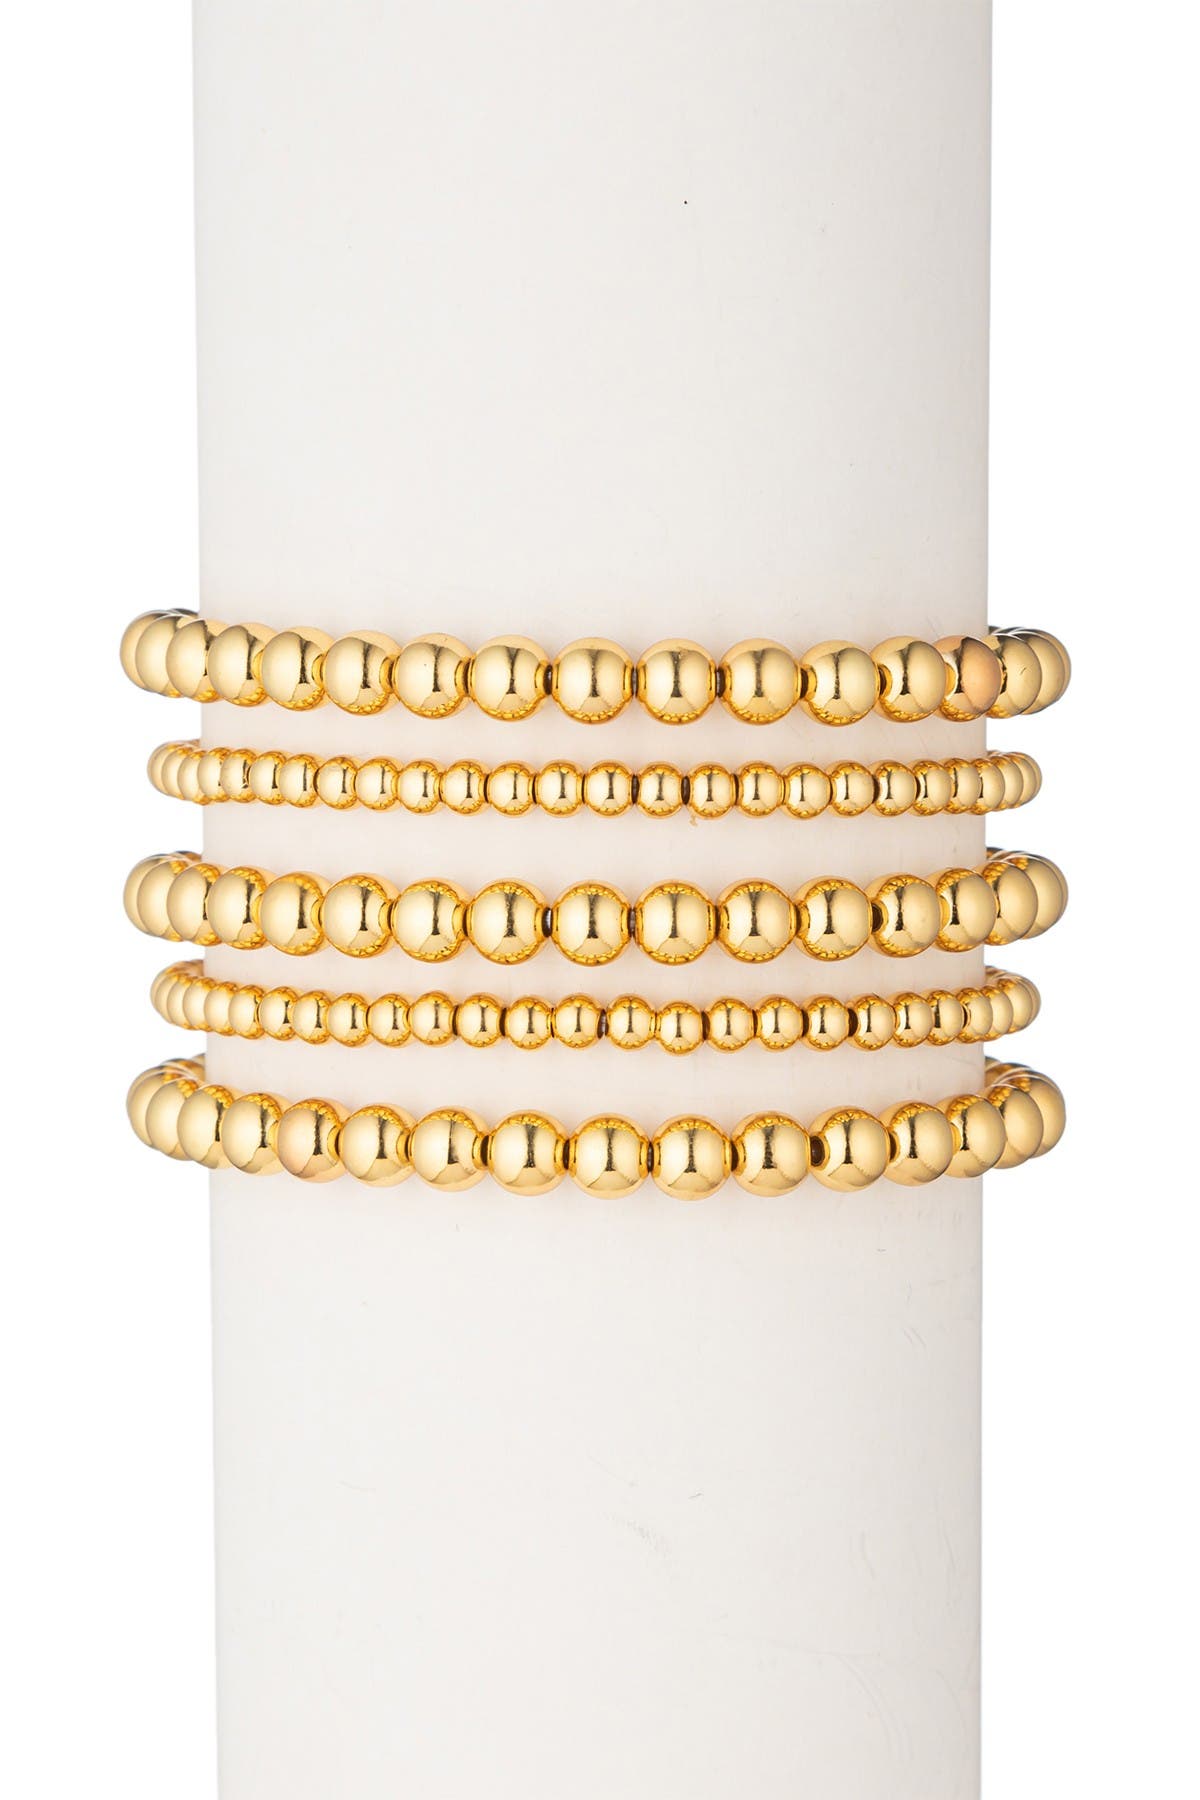 AMBER DAVIDSON Bohemian Leaves Knot Round Chain Opening Gold Silver Bracelet Set Women Fashion Jewelry